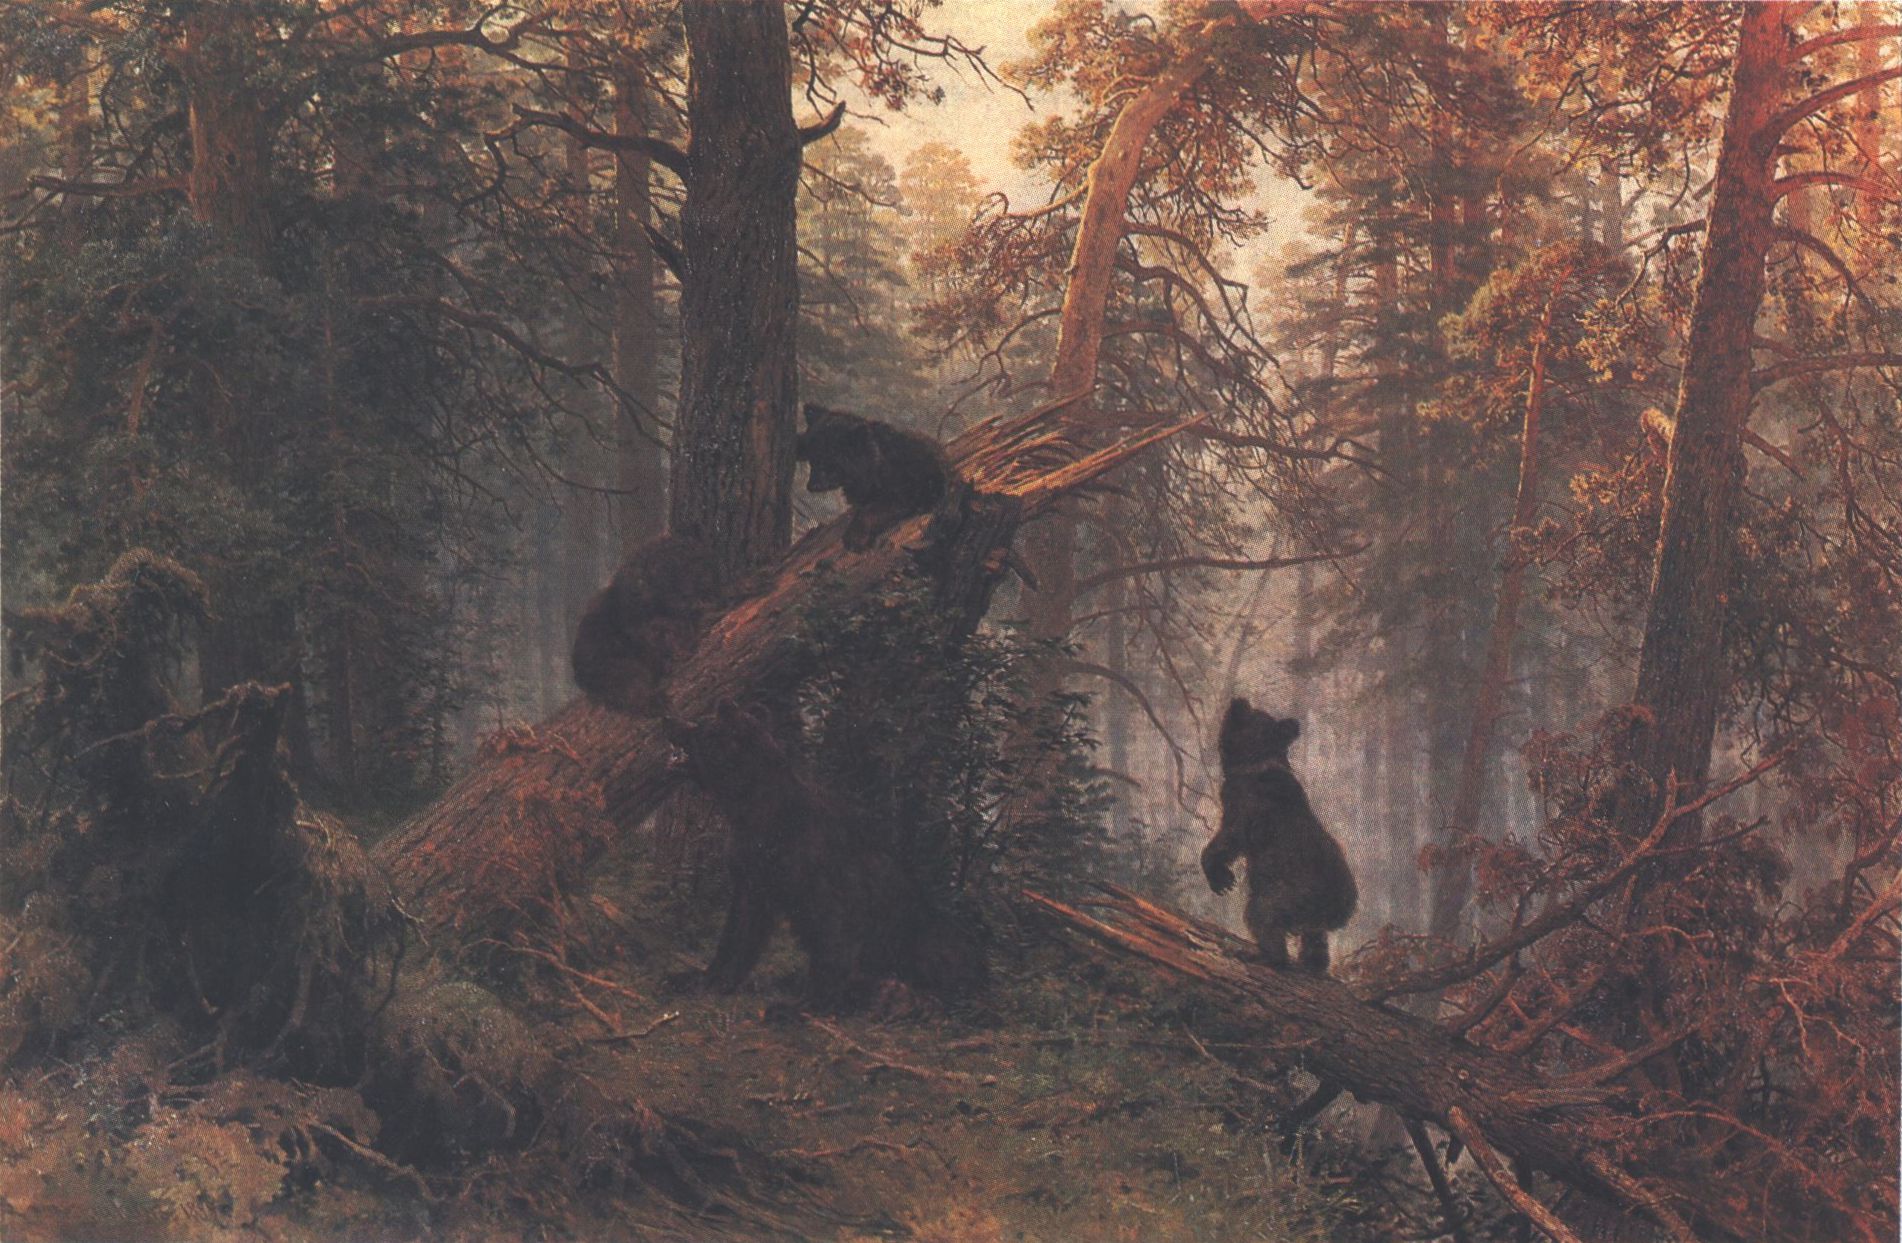 250. Шишкин И.И. Утро в сосновом лесу. 1889